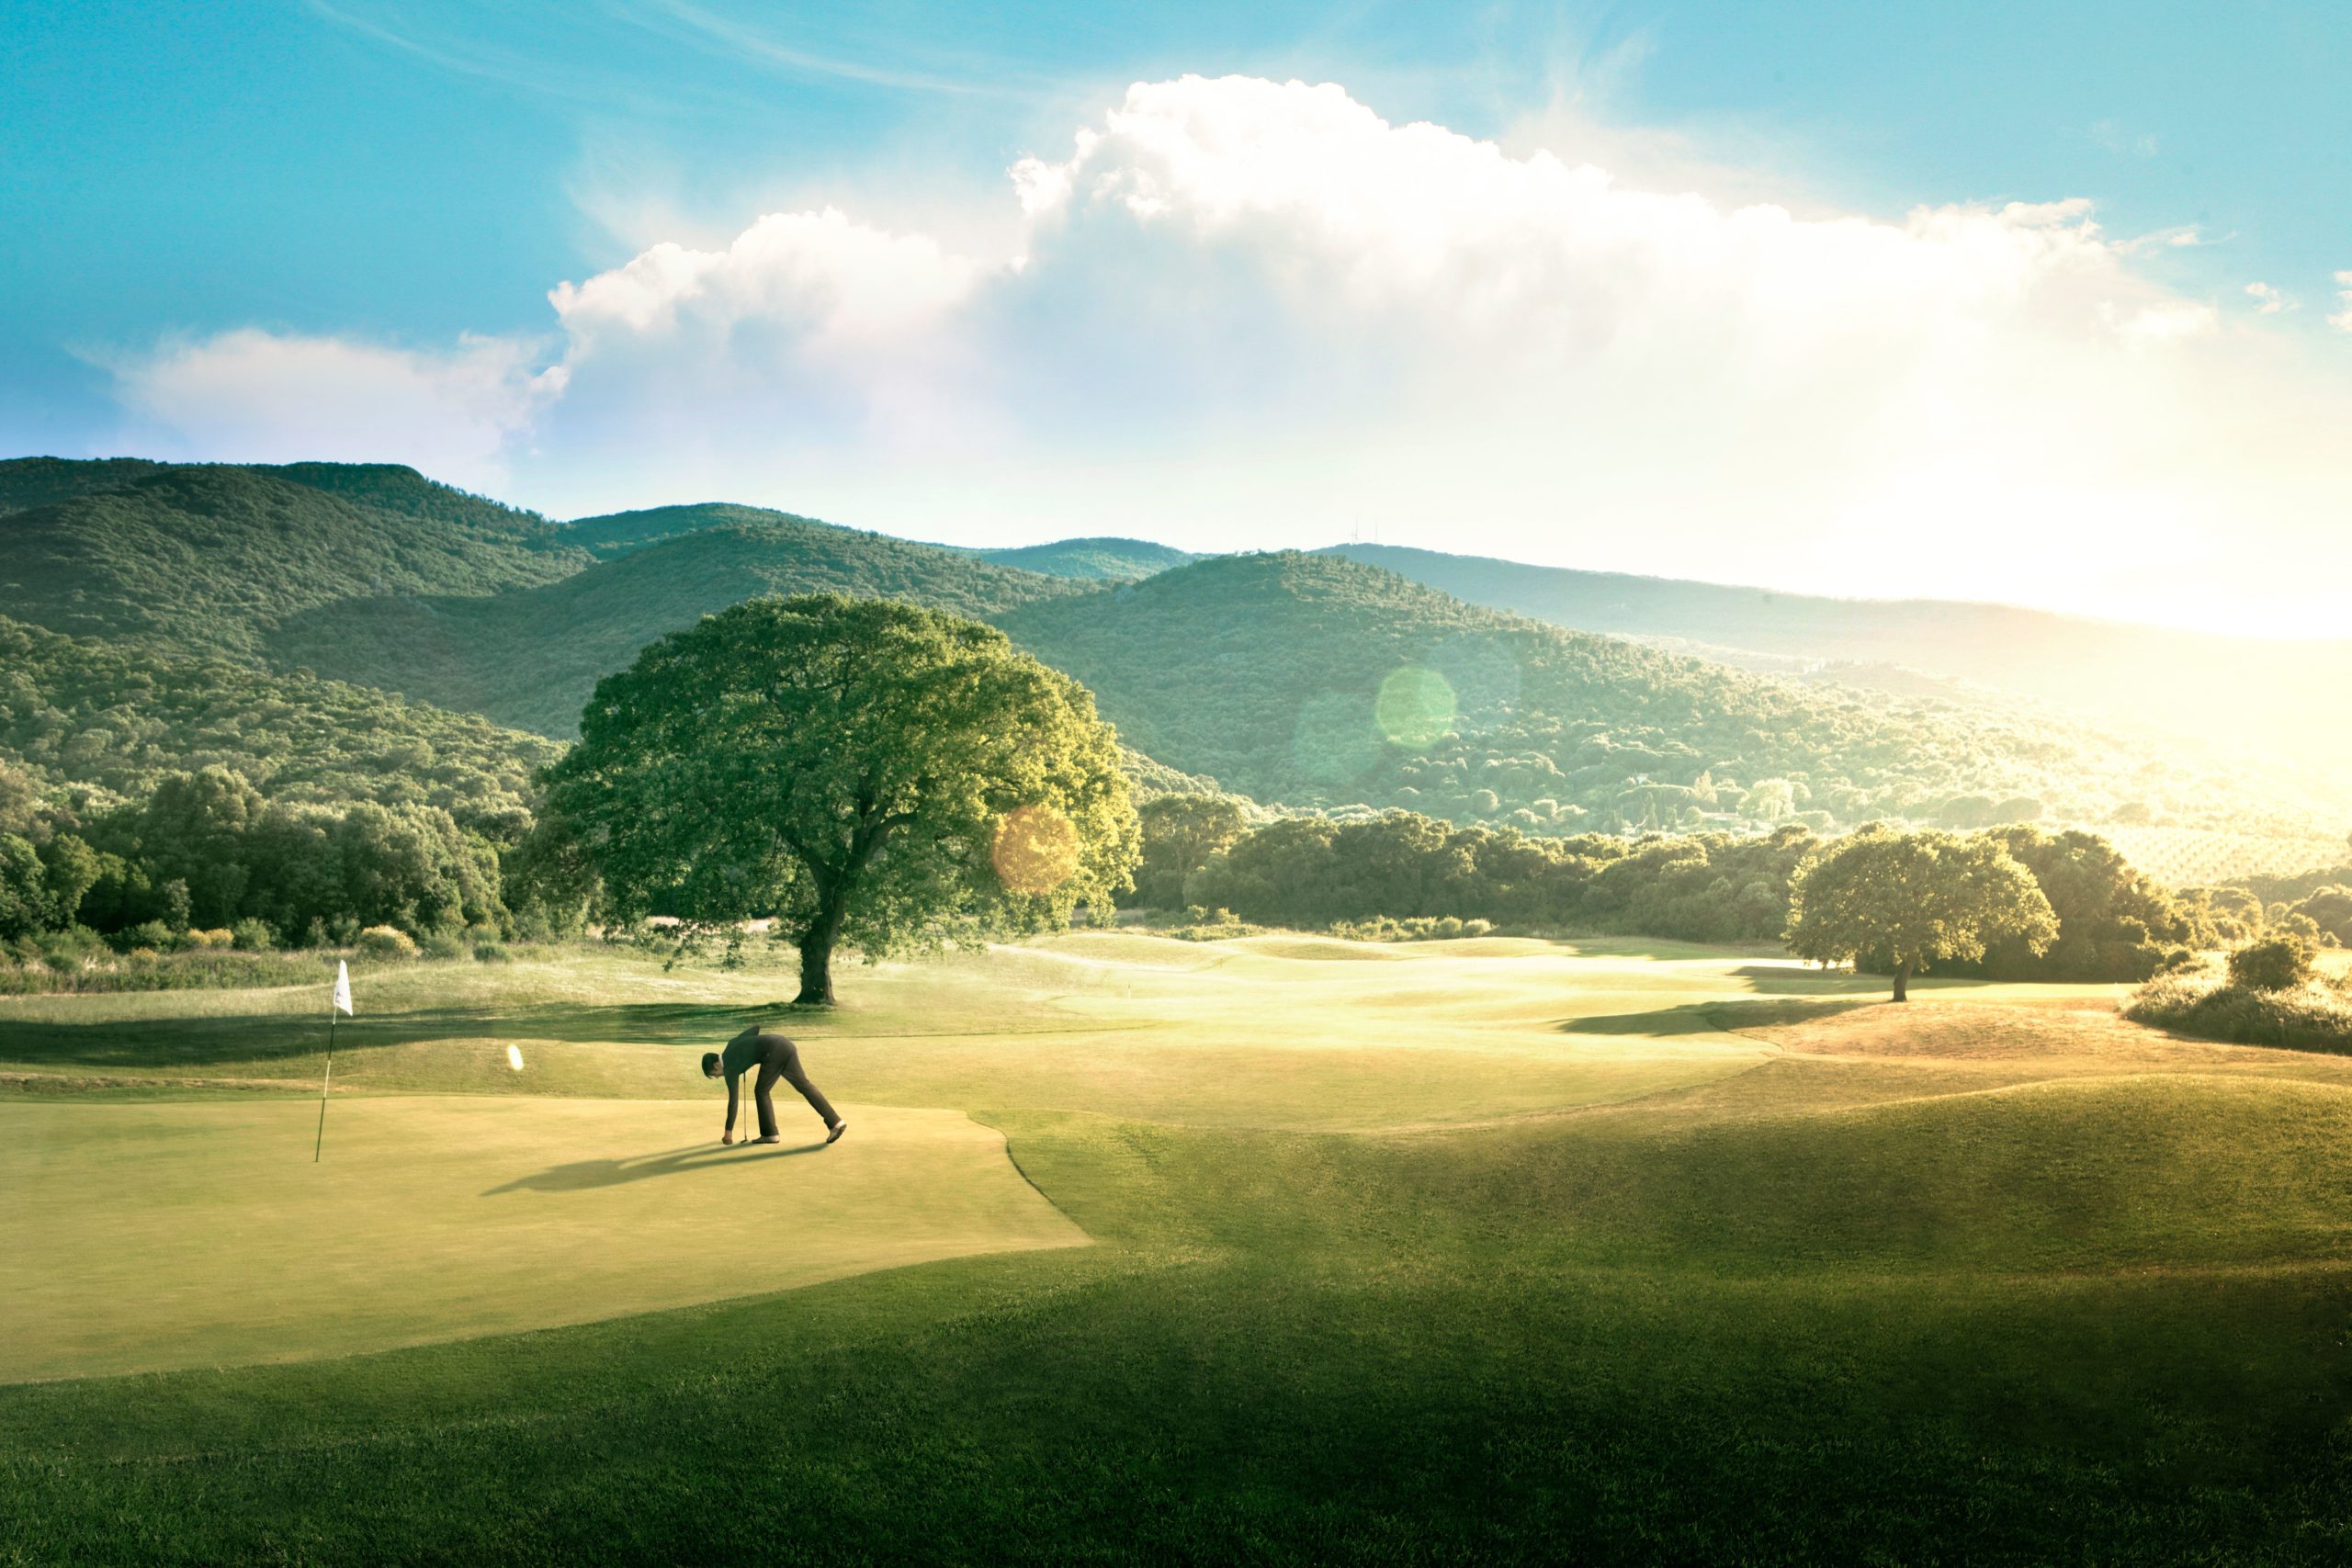 Argentario Golf Club will host the Italian Open in 2025